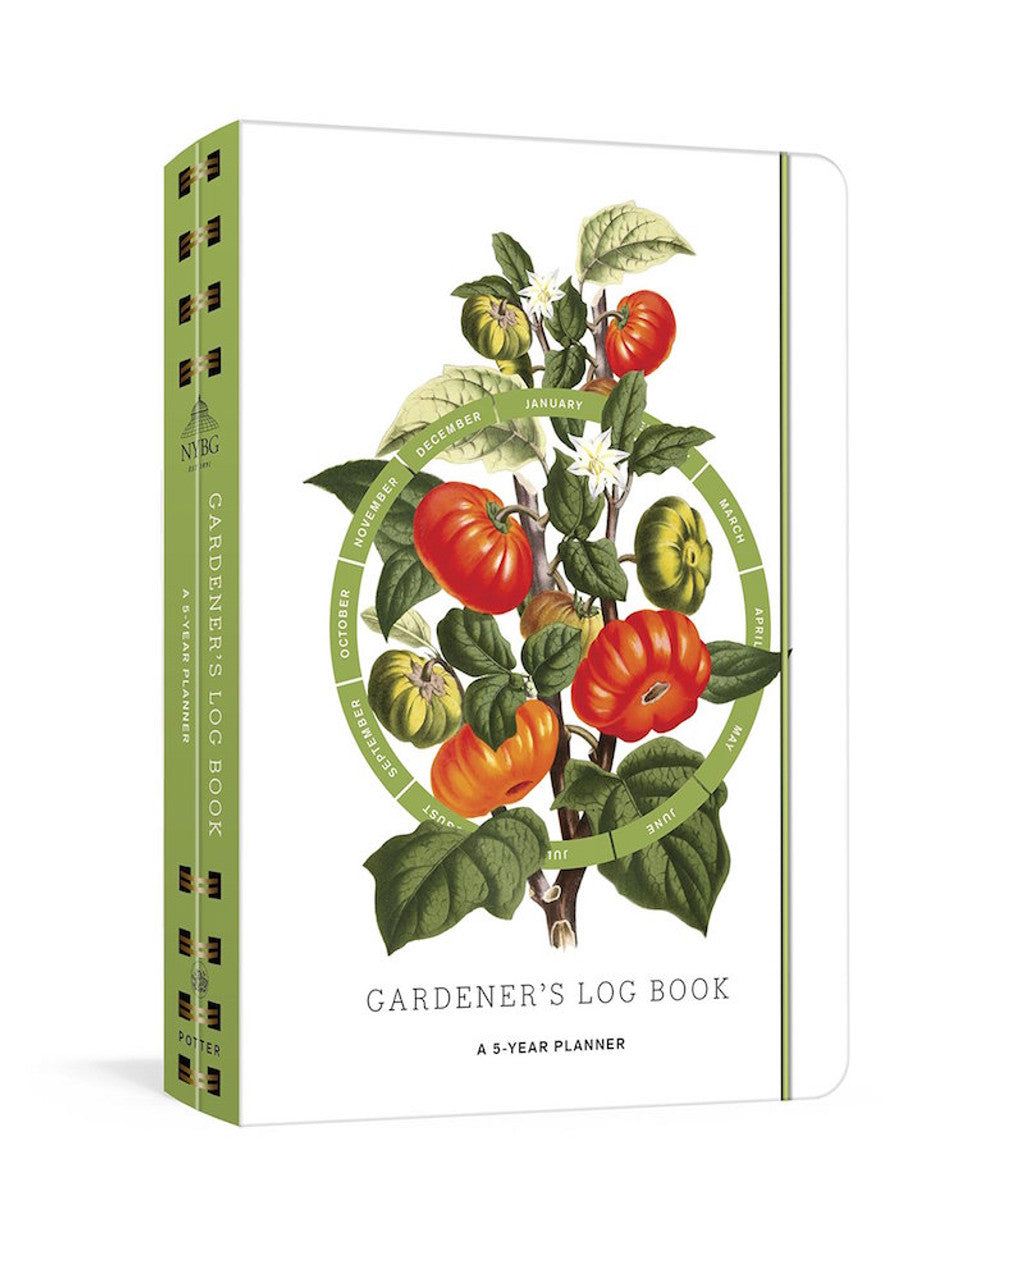 Gardener's Log Book: A 5-Year Planner by The New York Botanical Garden